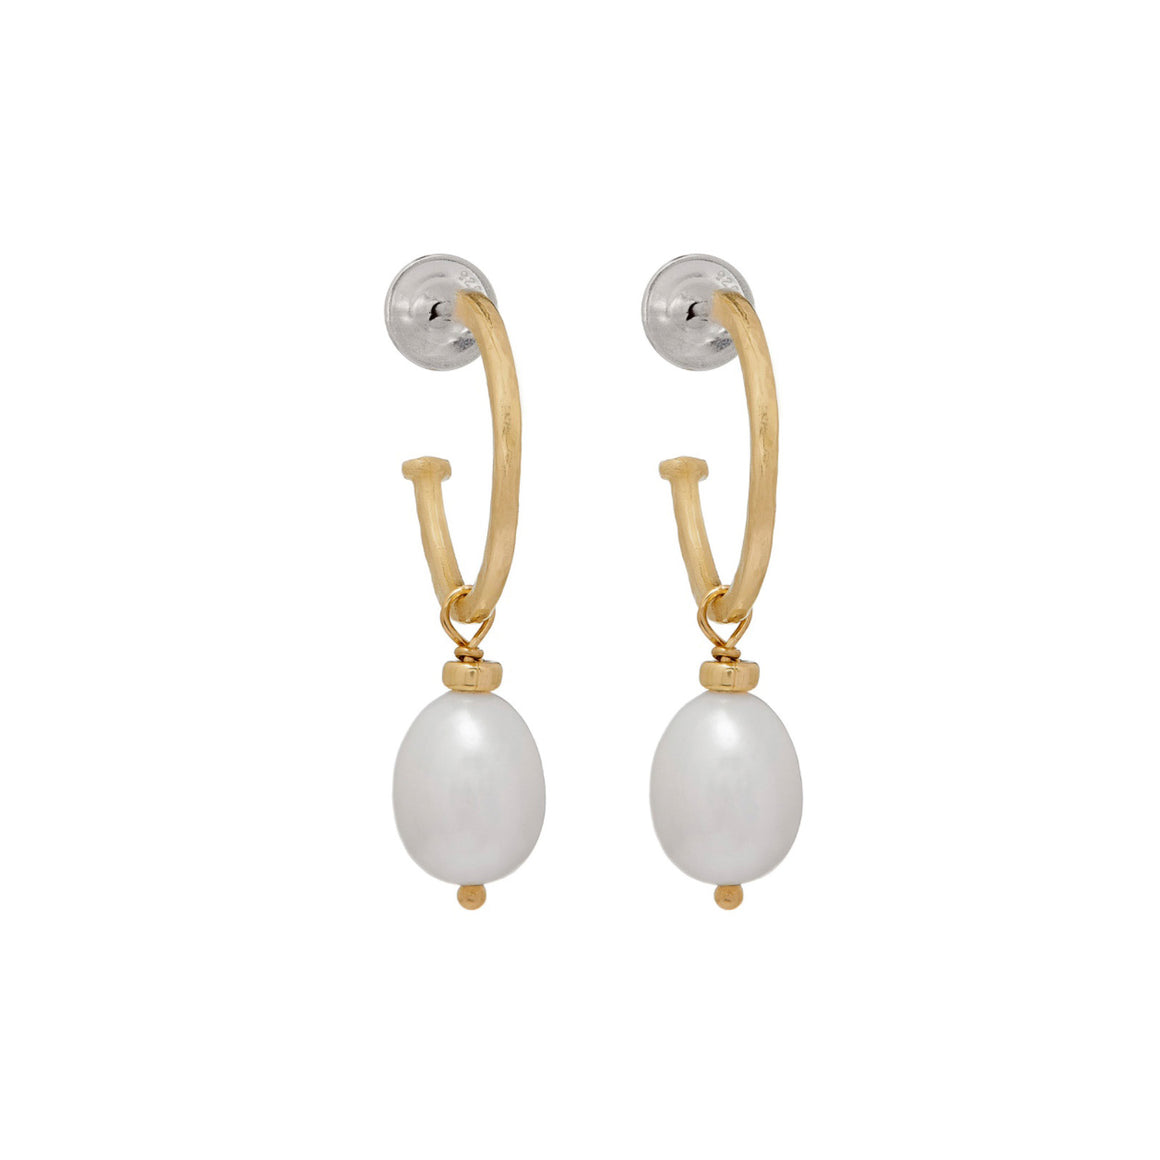 Gold Hoop Earrings With White Freshwater Pearls